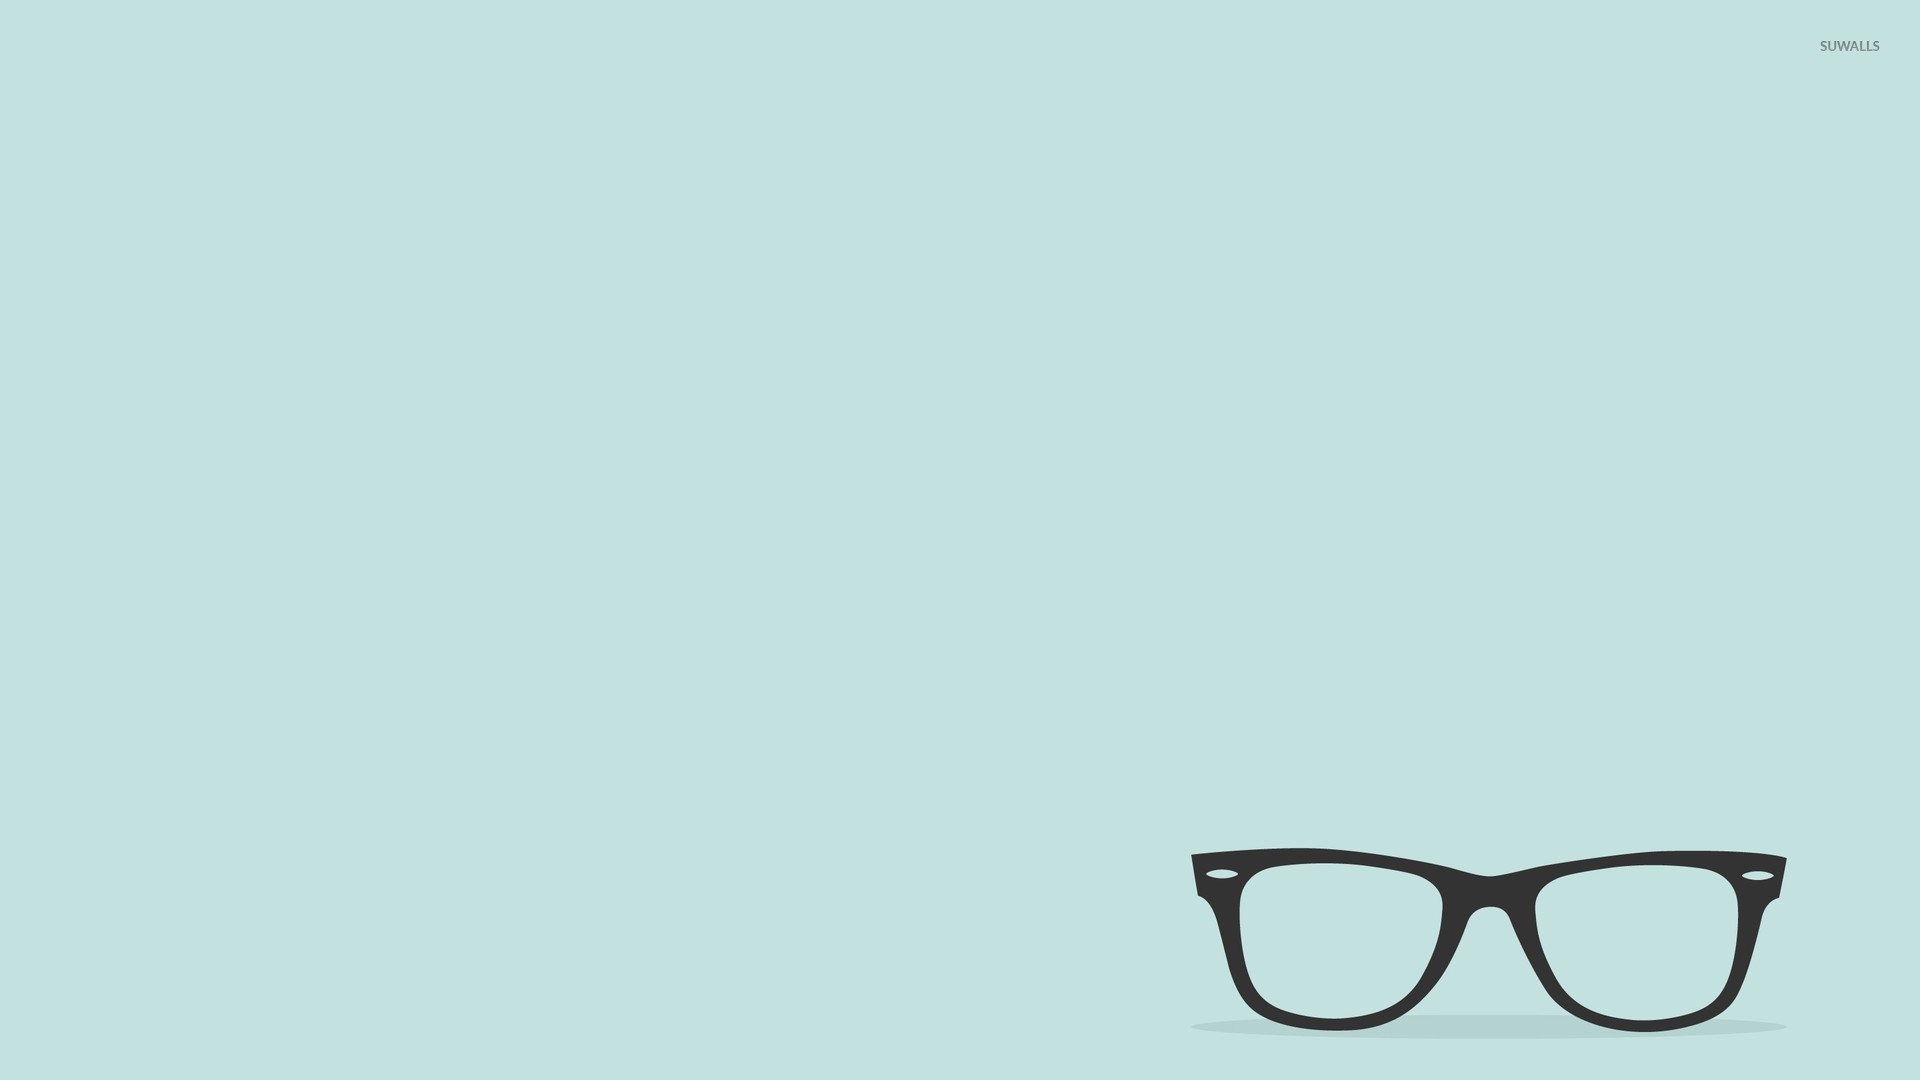 Eyeglasses With Black Frames Wallpaper Minimalistic